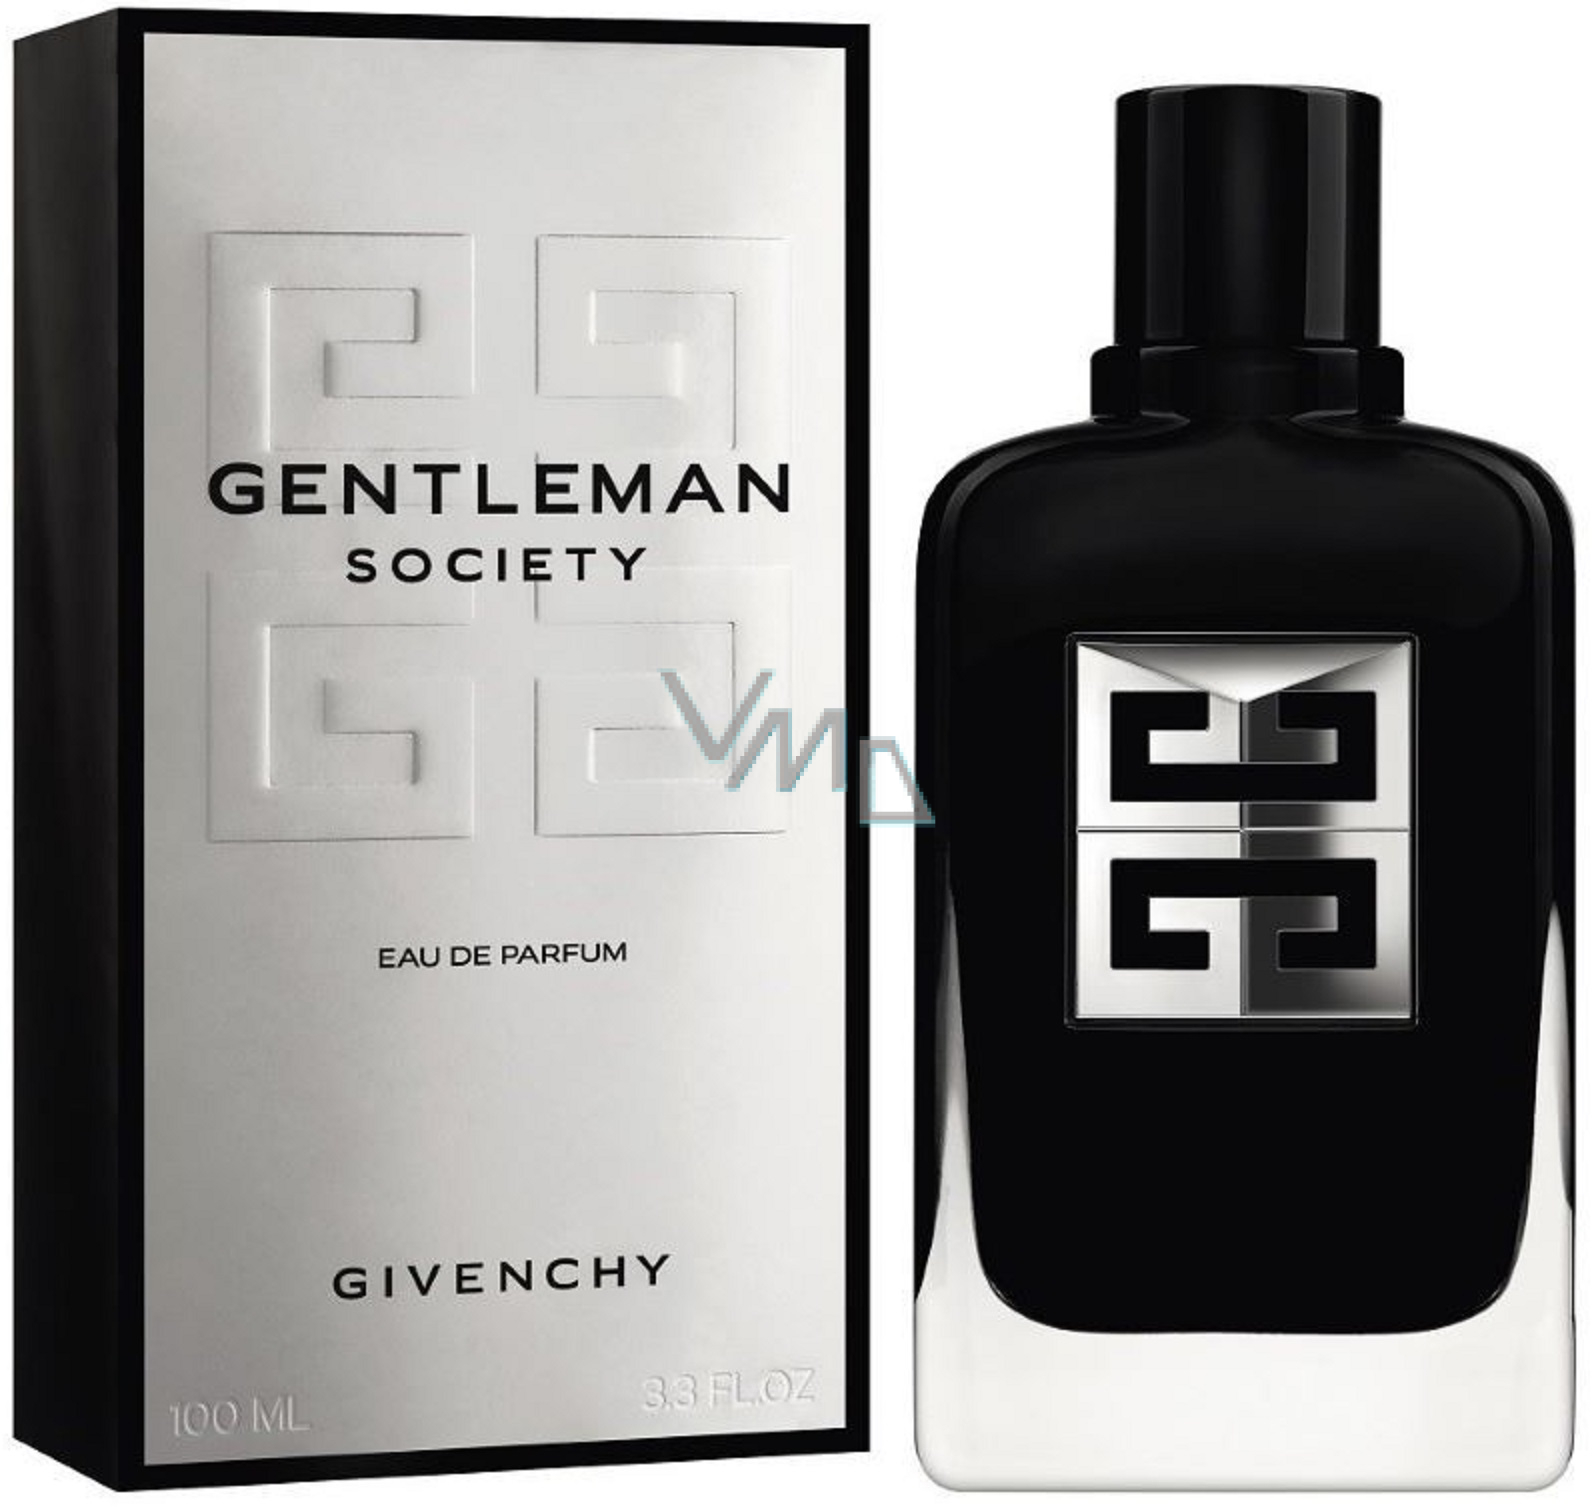 Society c. Духи Gentleman Givenchy мужские. Givenchy Gentlemen Society 100 ml. Givenchy Gentleman 100ml EDP. Givenchy Gentleman Society Eau de Parfum.